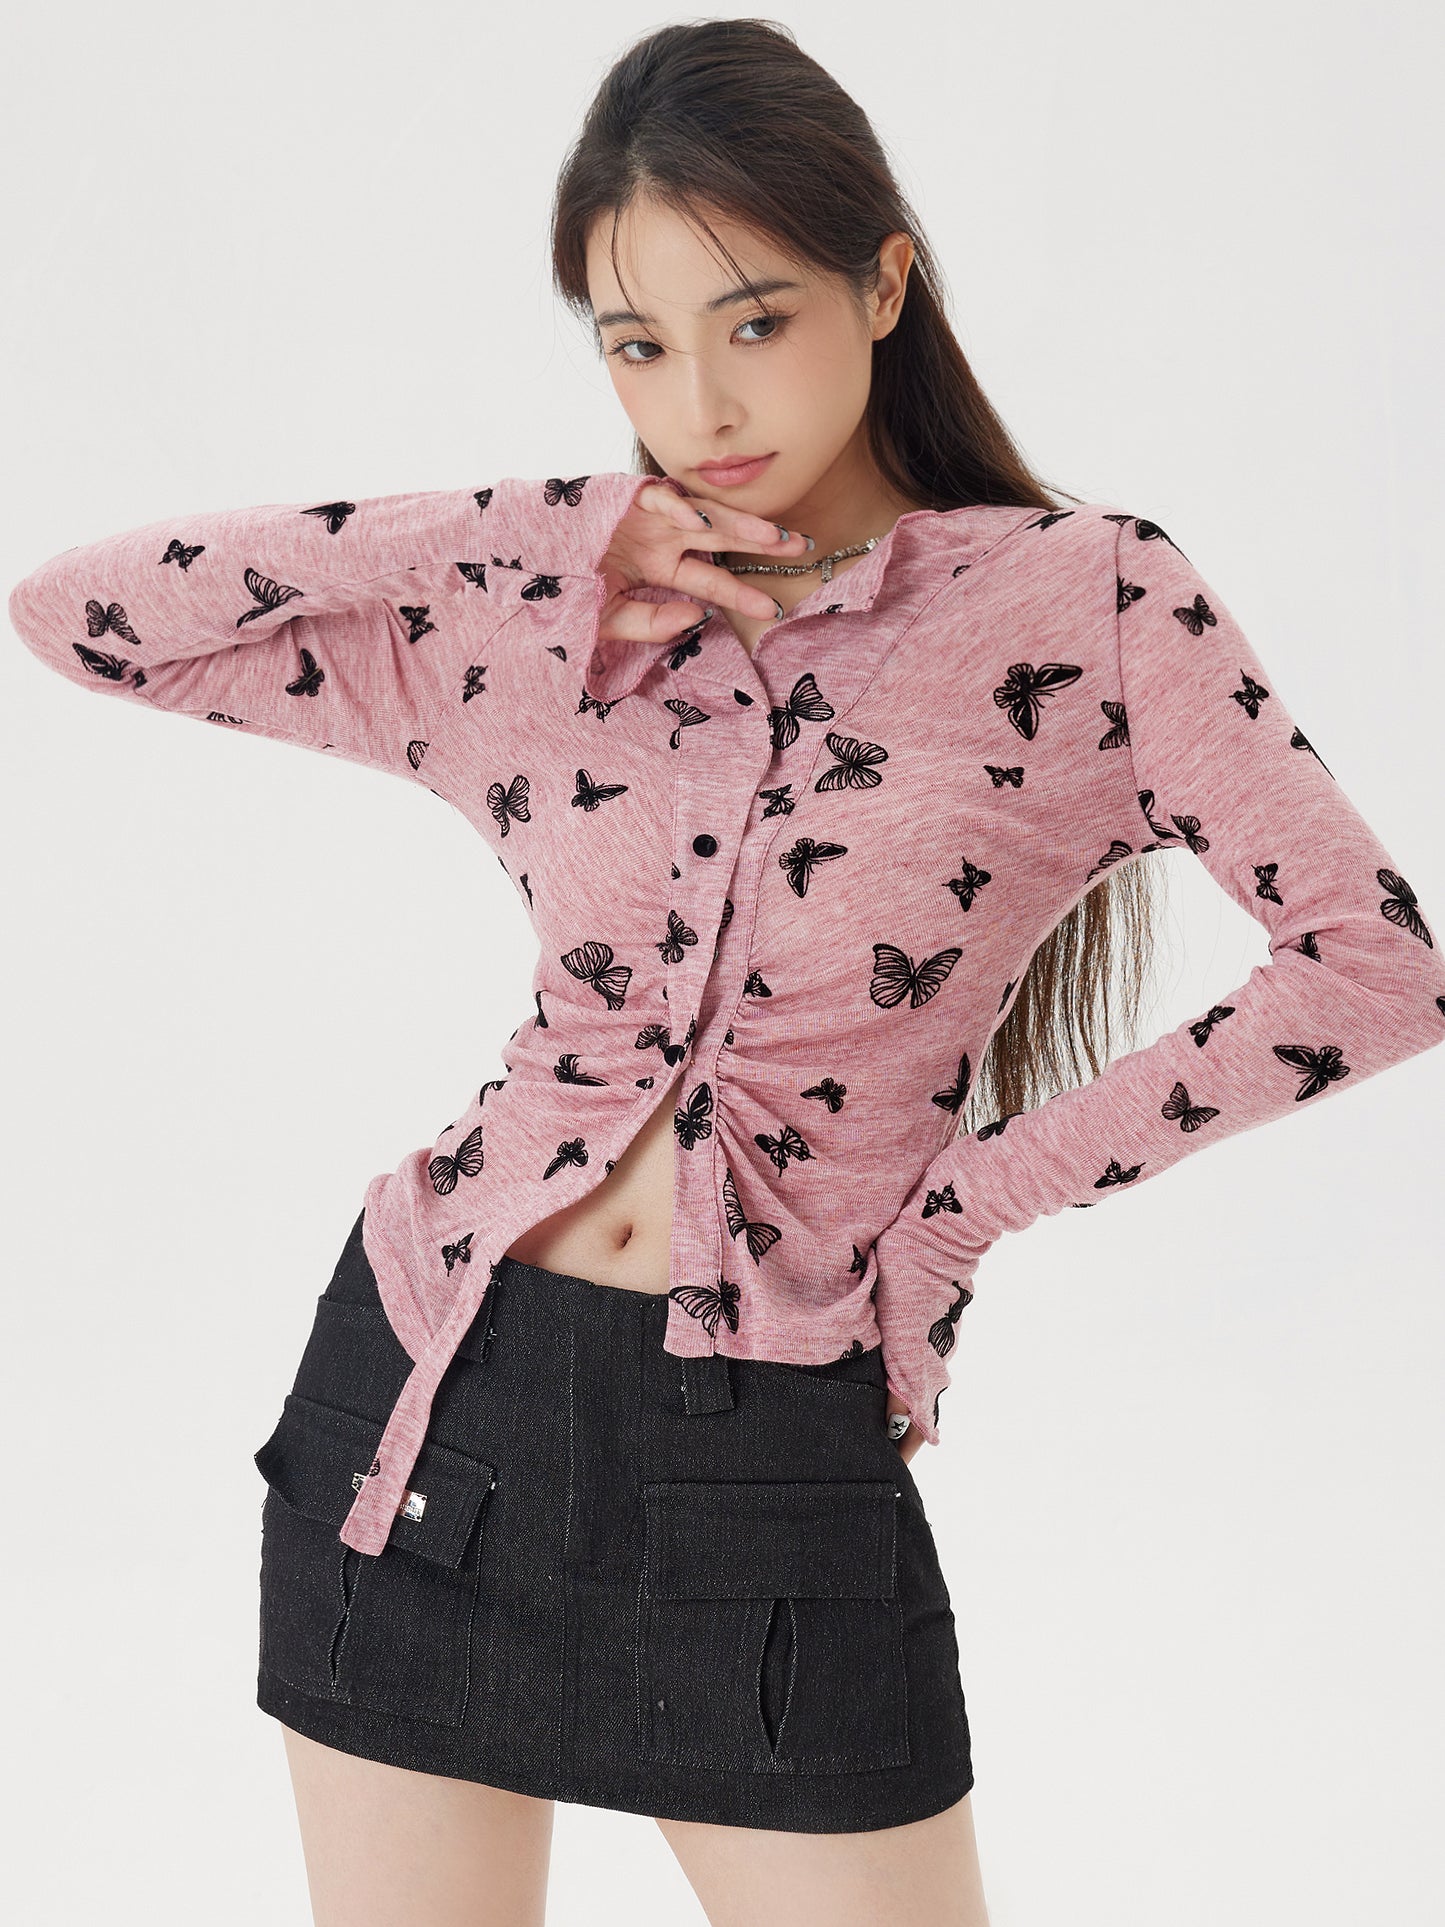 Spring Summer Autumn Fall Fashion Girl Women Y2K Butterfly Pink Black Pattern Top Shirt